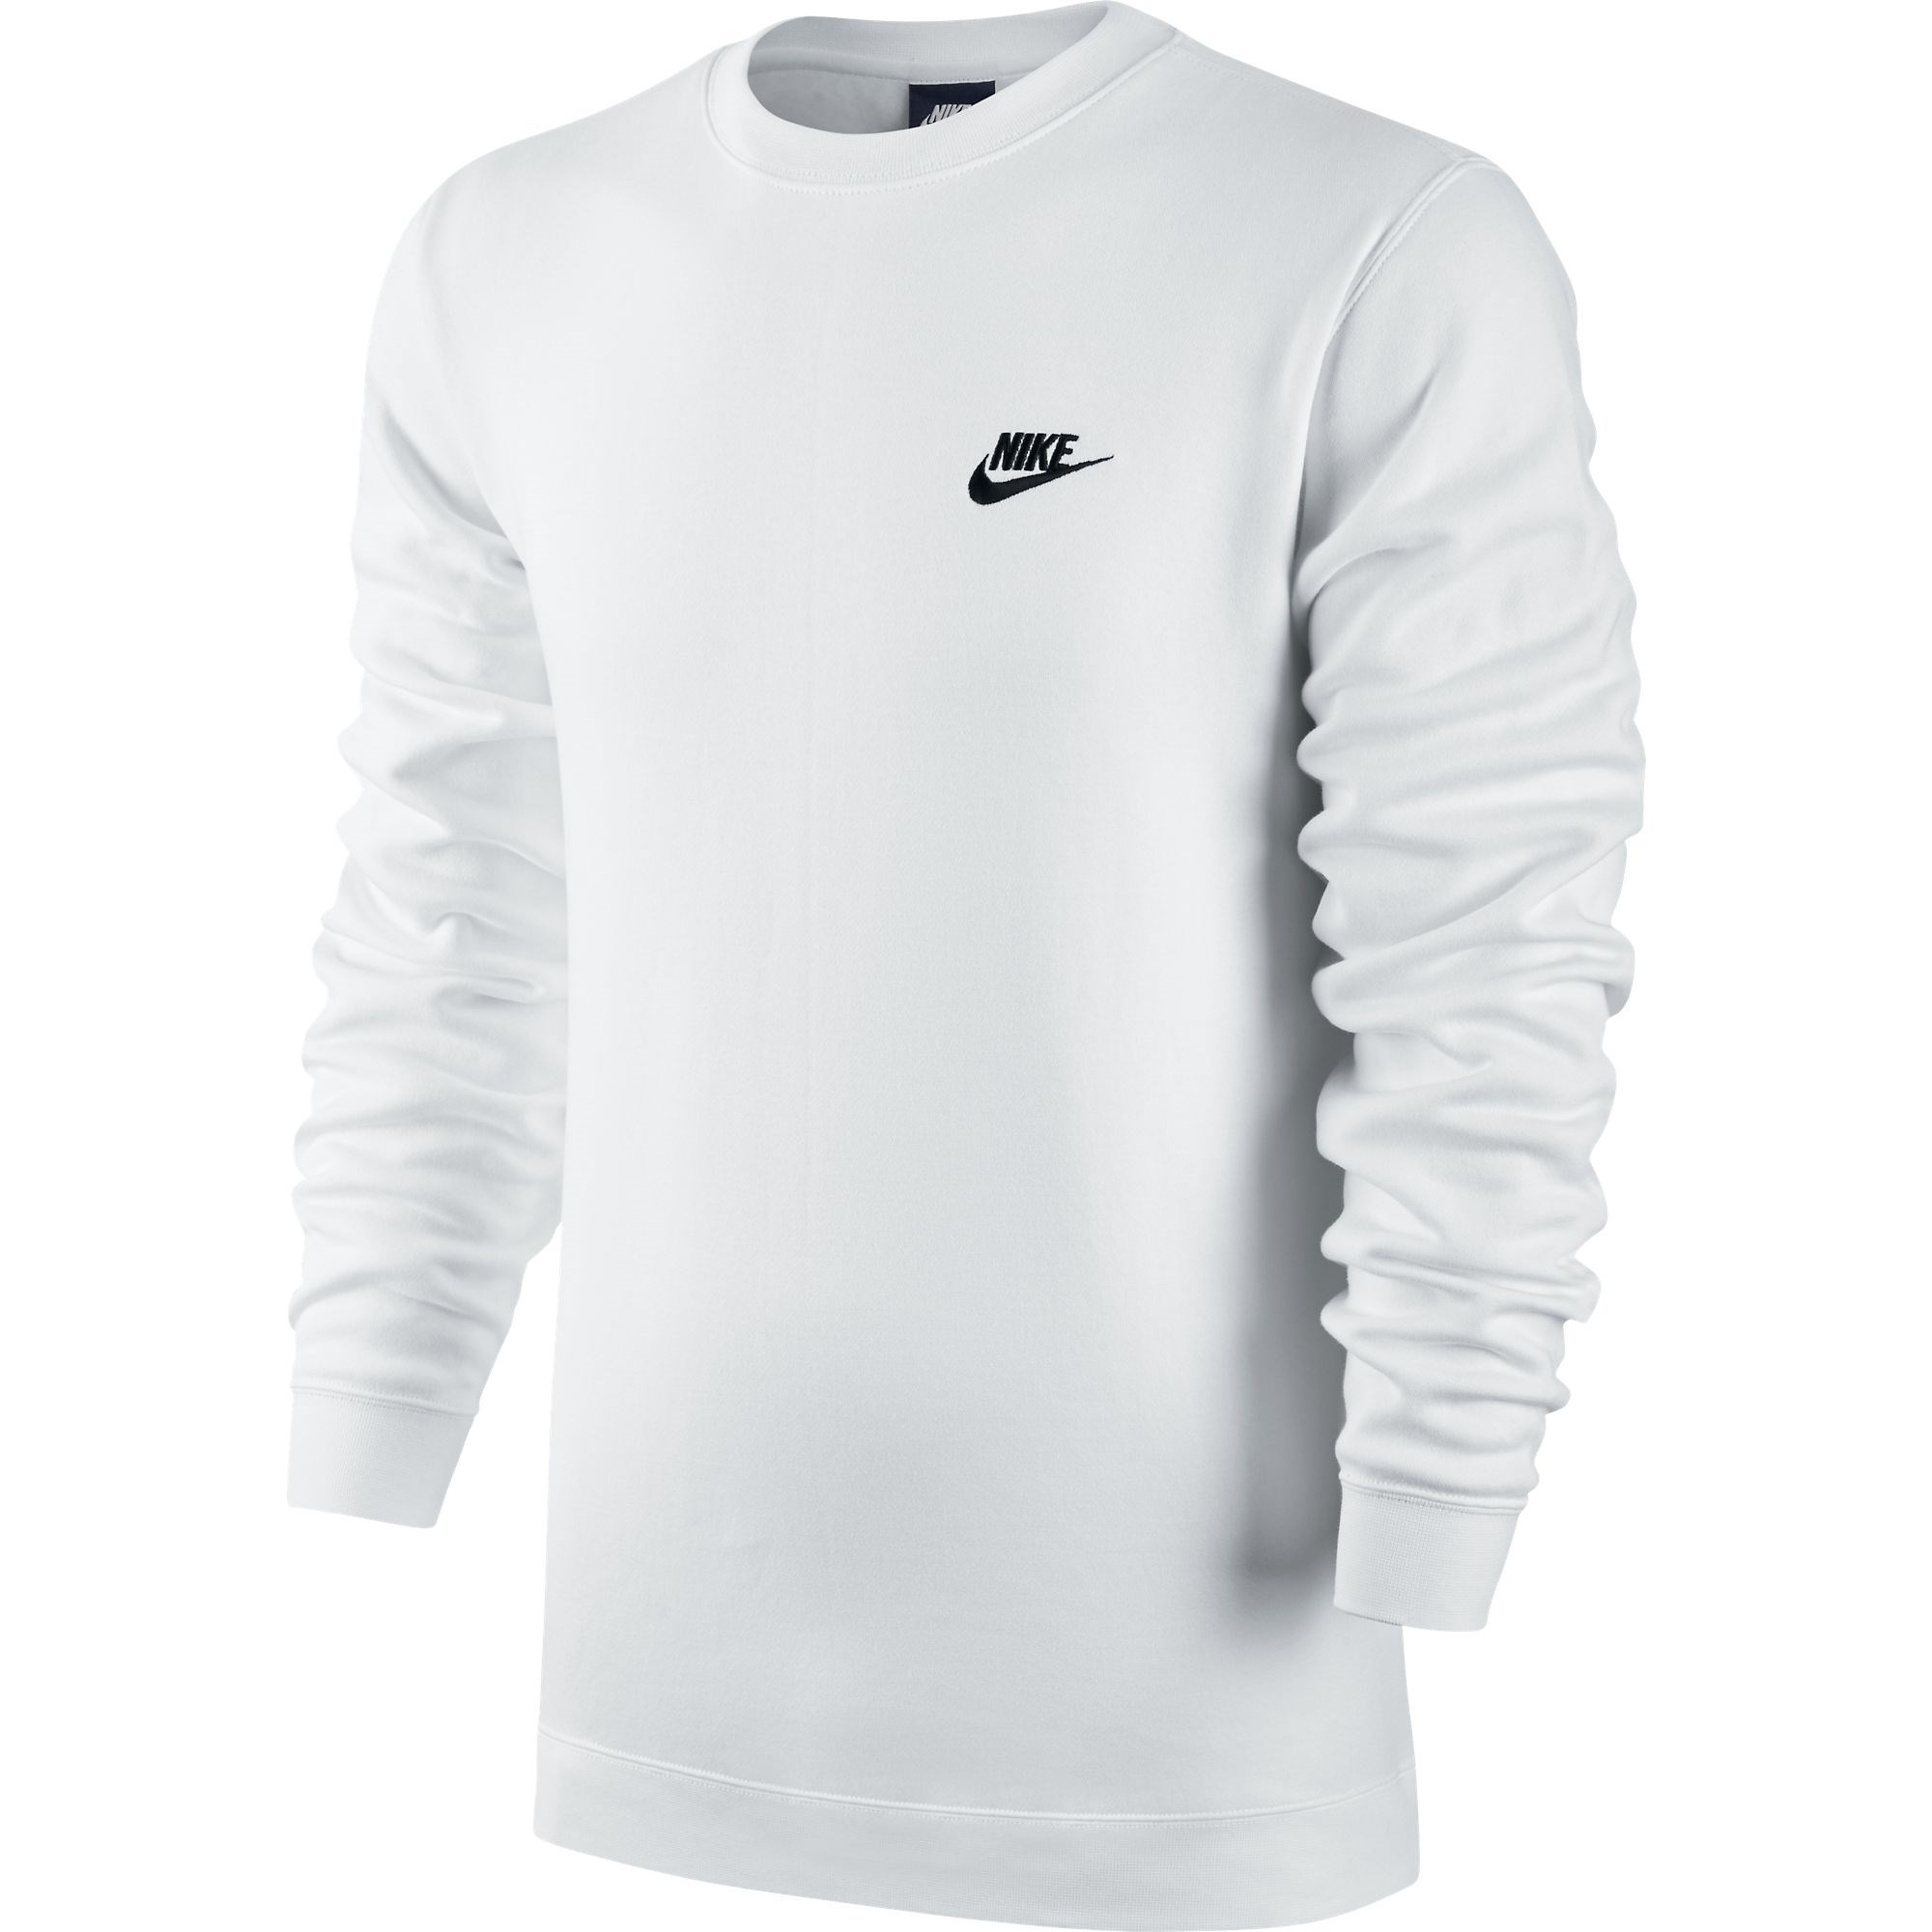 Nike Mens Sportswear Crew Erkek Sweatshirt Ürün kodu: 804340-100 | Etichet  Sport